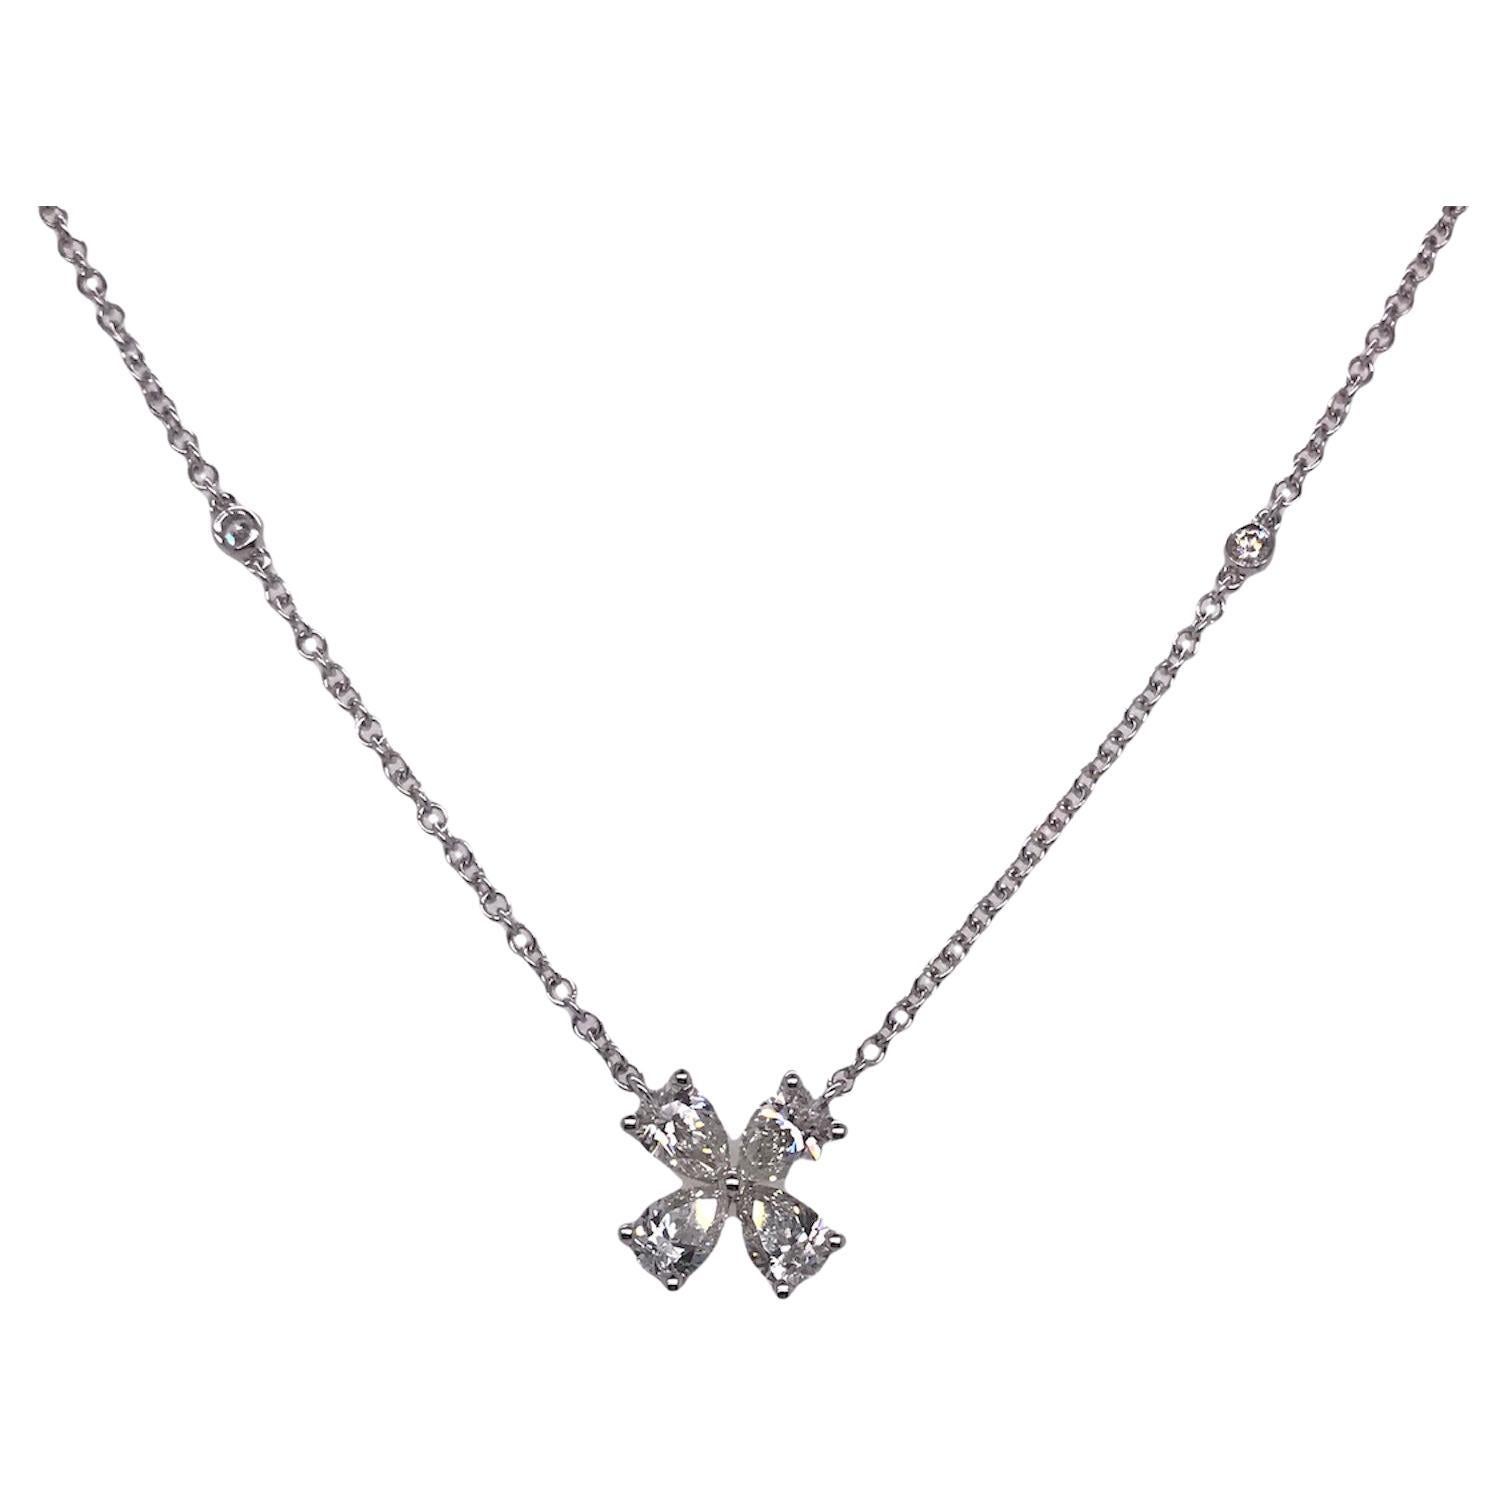 Diamond Town 1.38 Carat Diamond Necklace in 18k White Gold